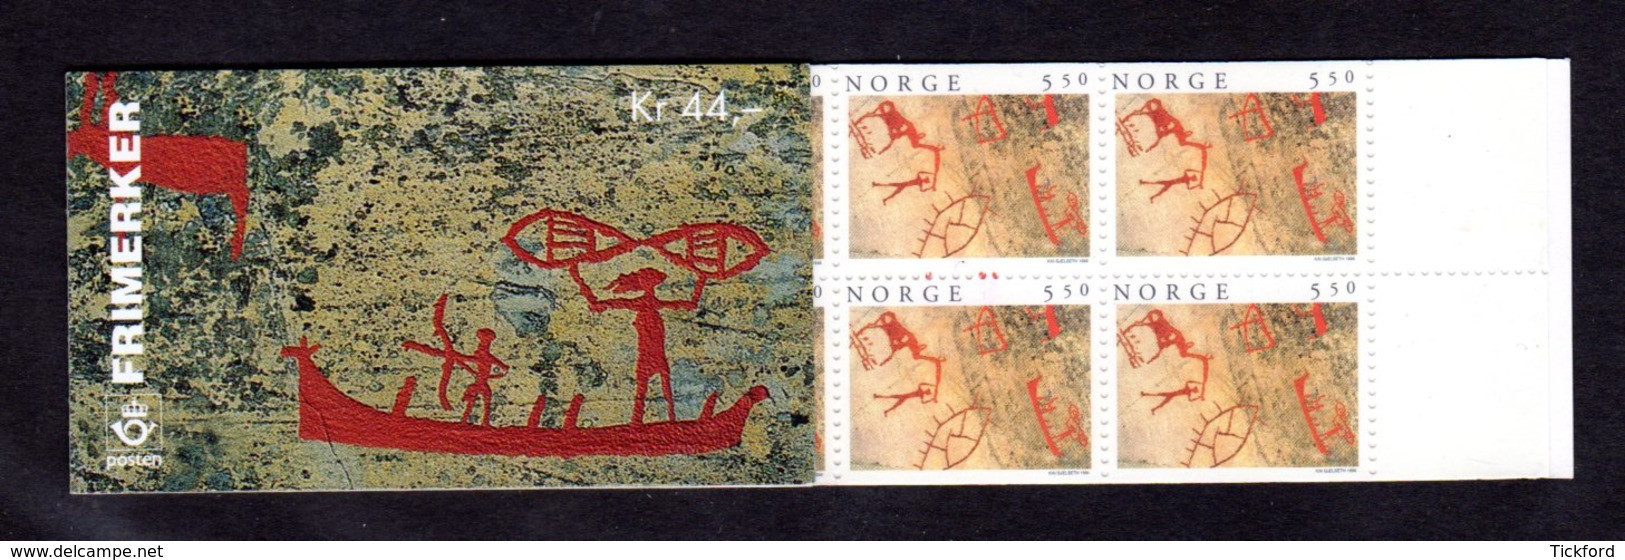 NORVEGE 1996 - CARNET Yvert C1165 - Facit H92 - NEUF** MNH - Tourisme, Peintures Rupestres D'Alta - Carnets